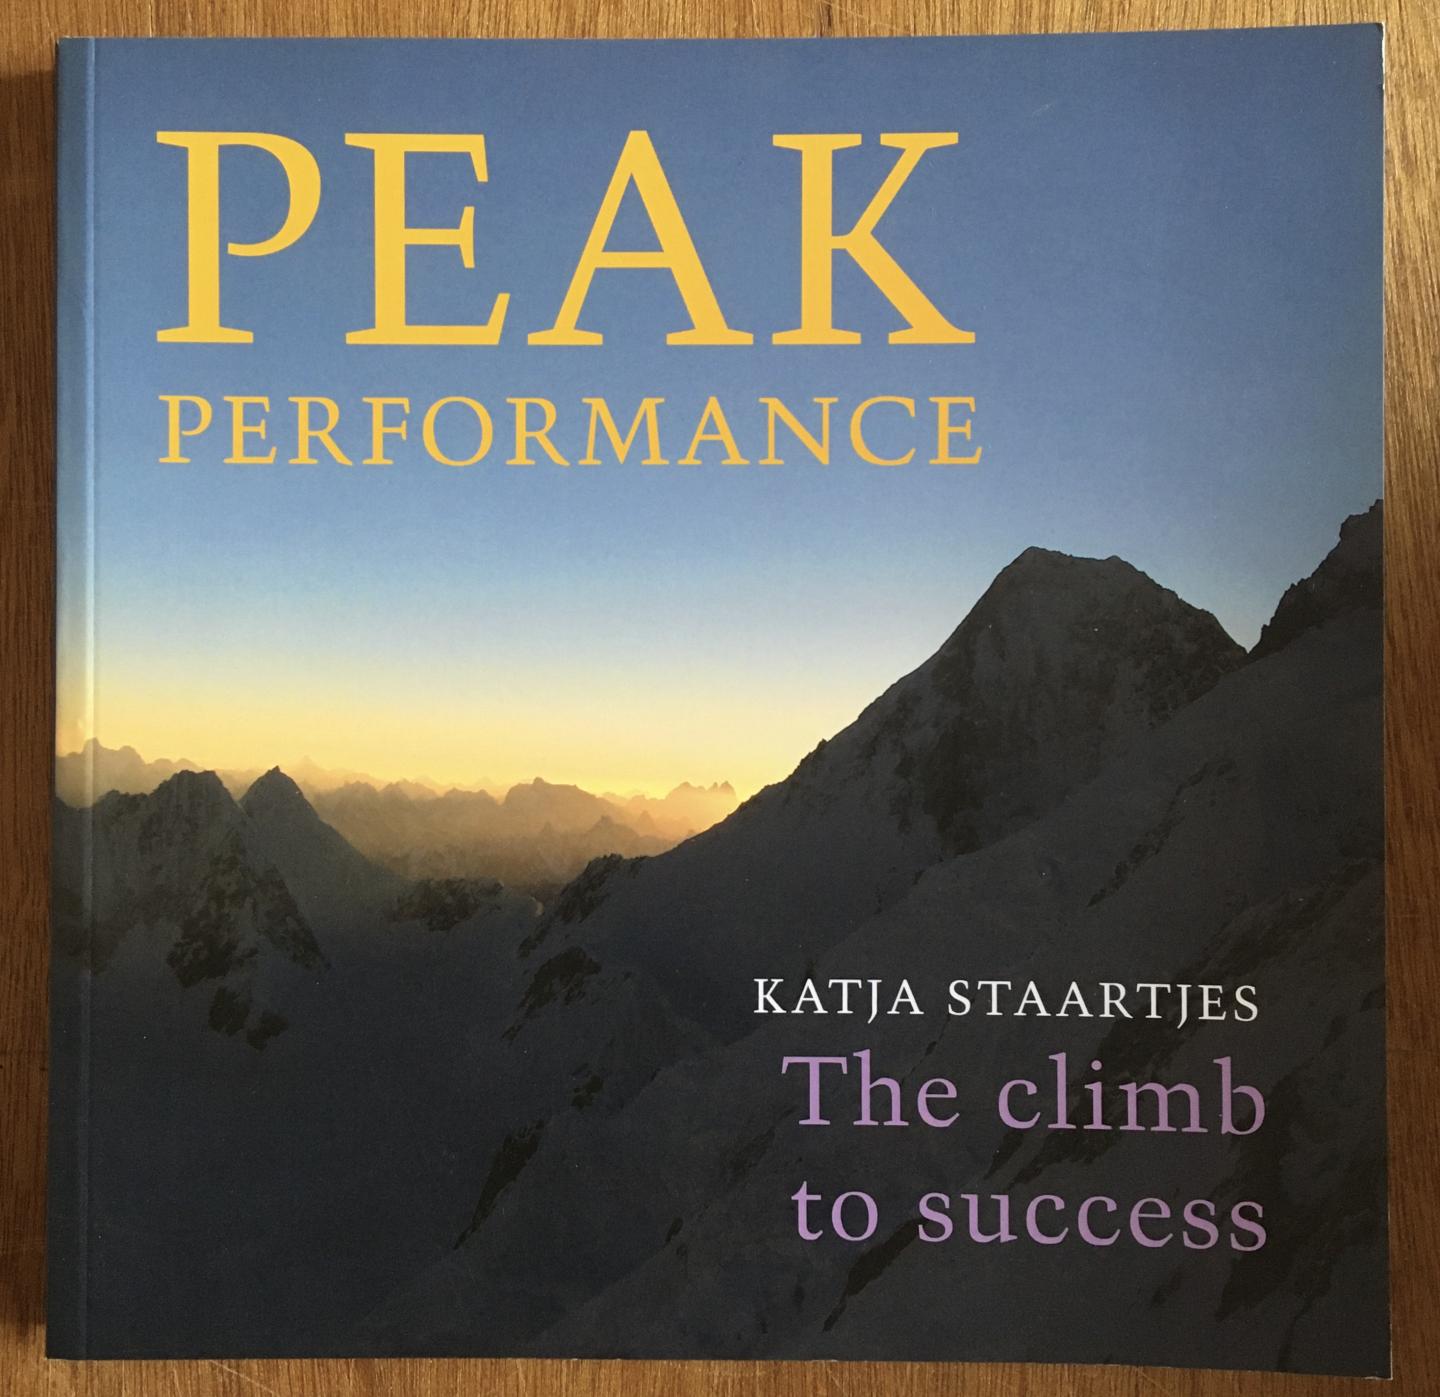 staartjes, Katja - Peak performance The climb to success